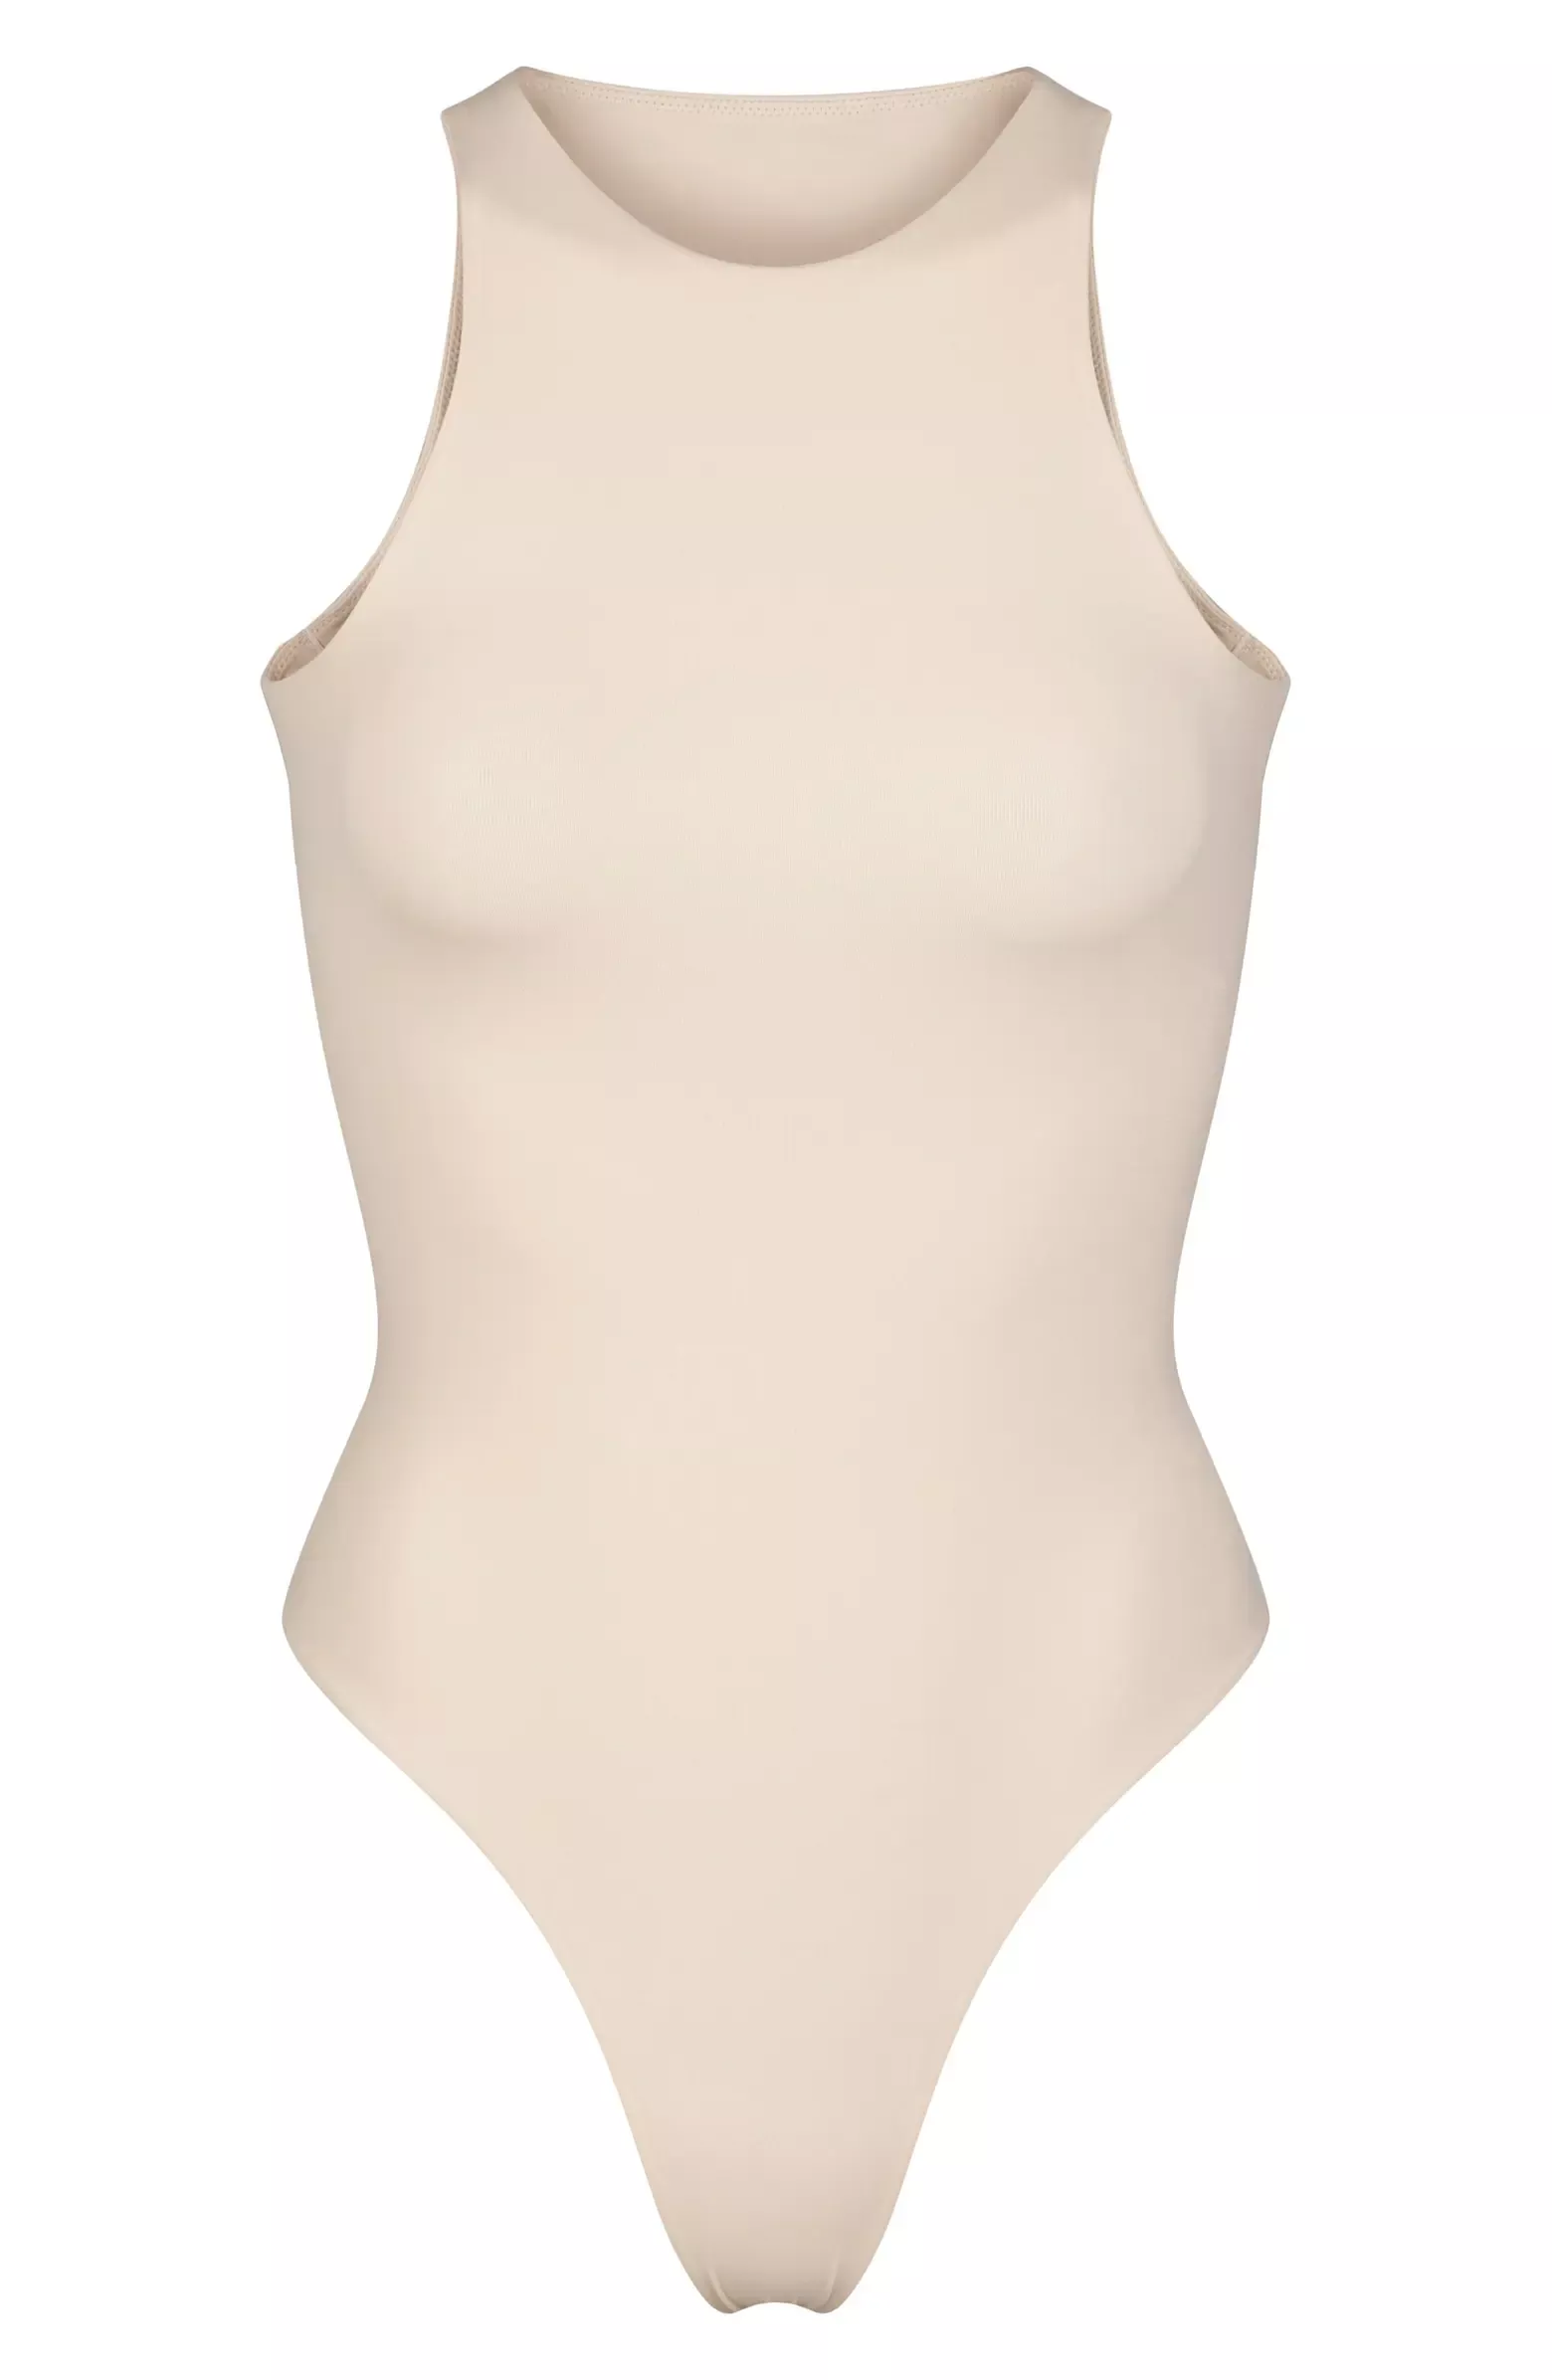 LCNBA Women's Sexy High Neck Sleeveless Bodysuit Basic Top